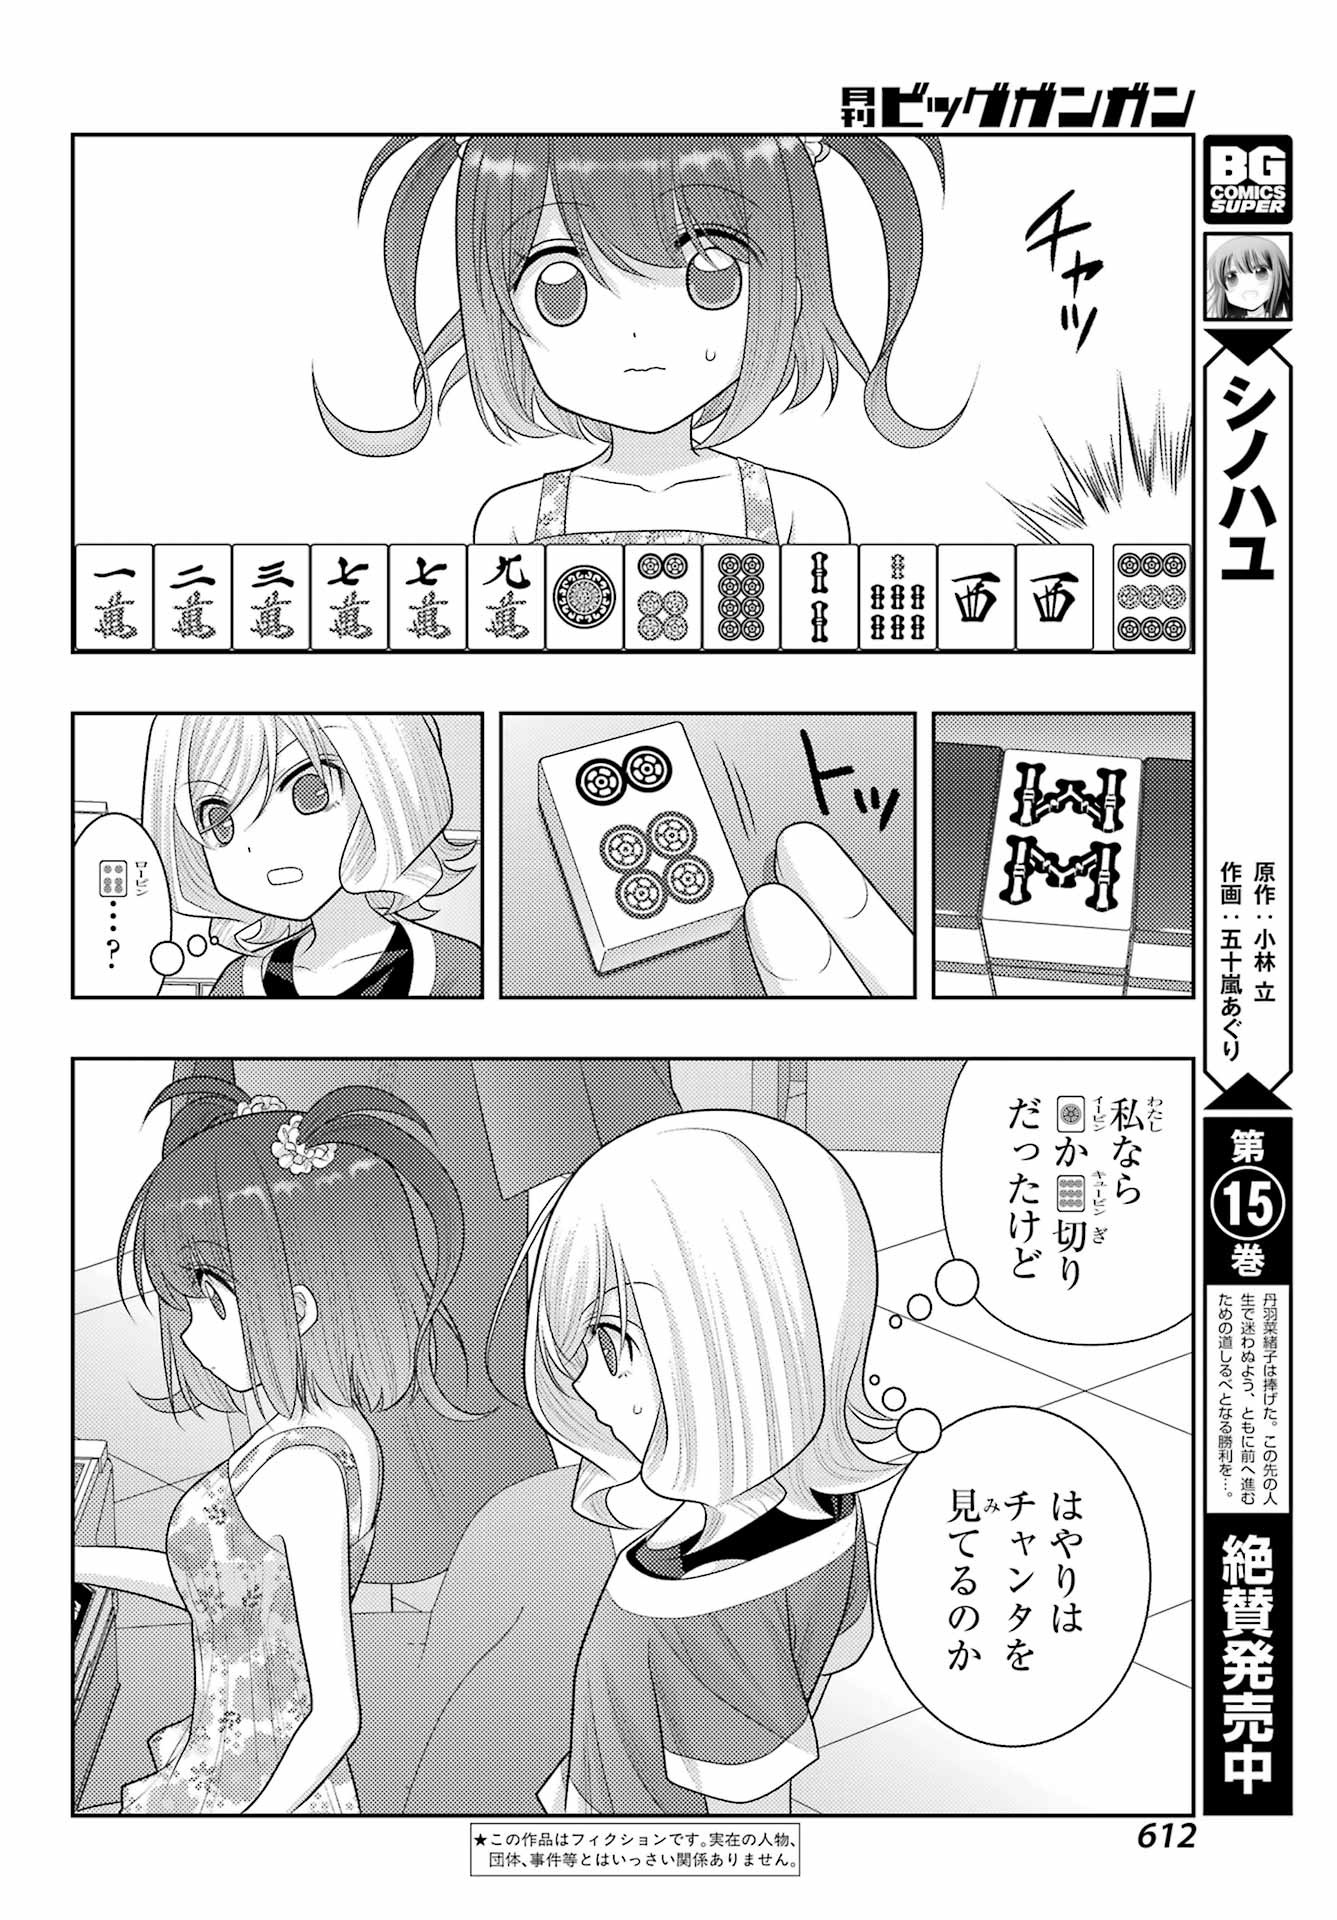 Shinohayu - The Dawn of Age Manga - Chapter 104 - Page 2